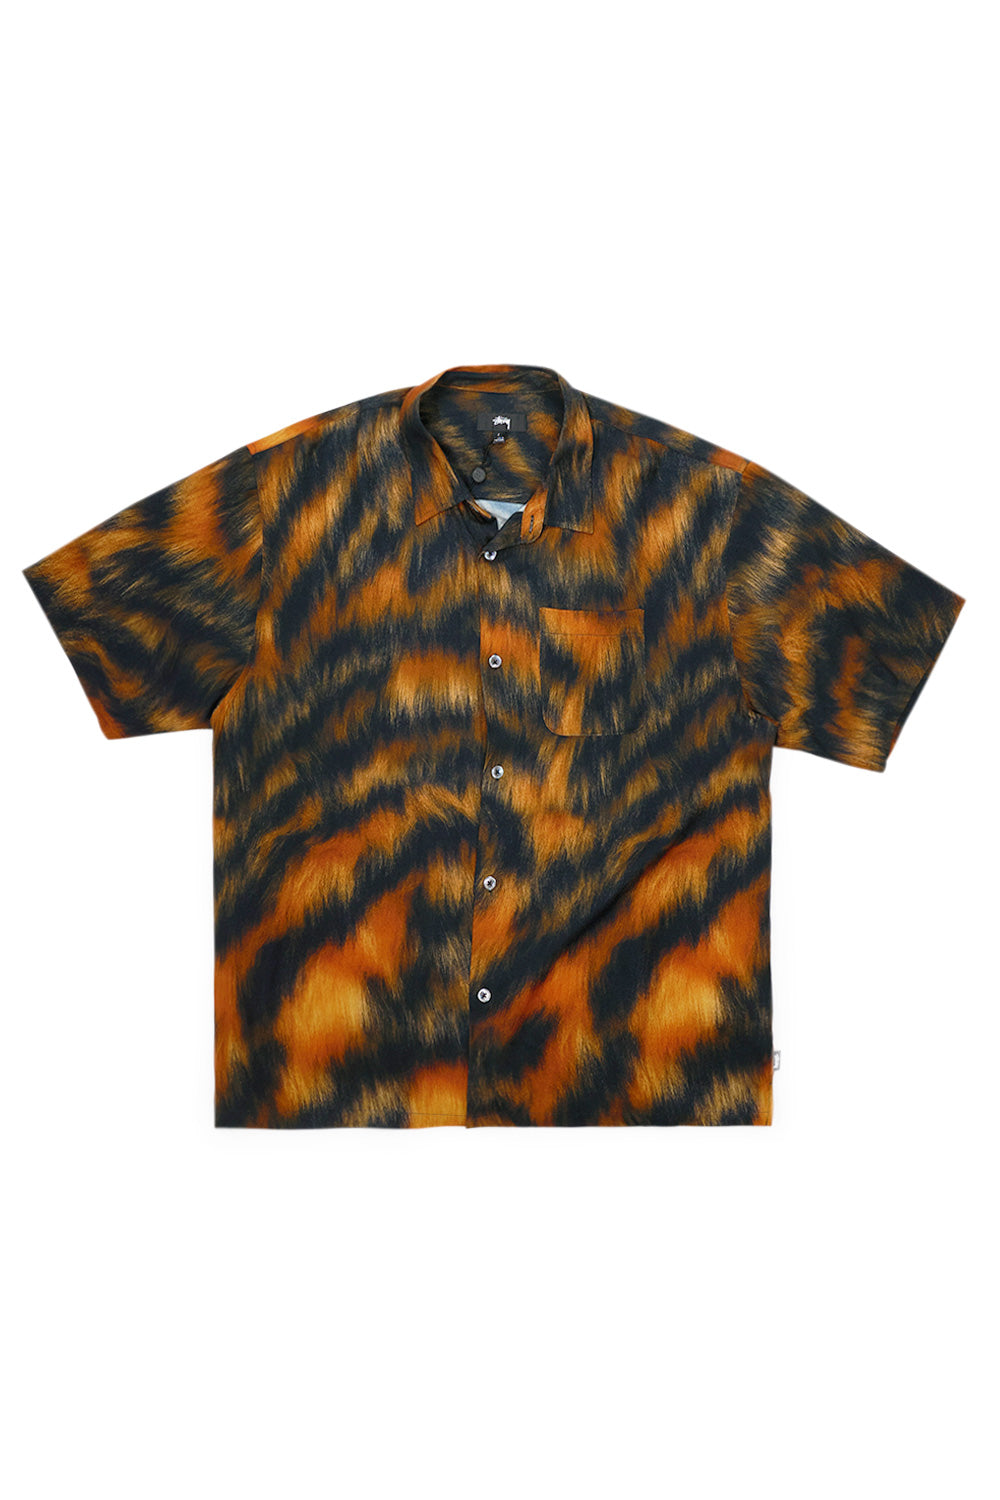 Stussy Fur Print Shirt Tiger - BONKERS